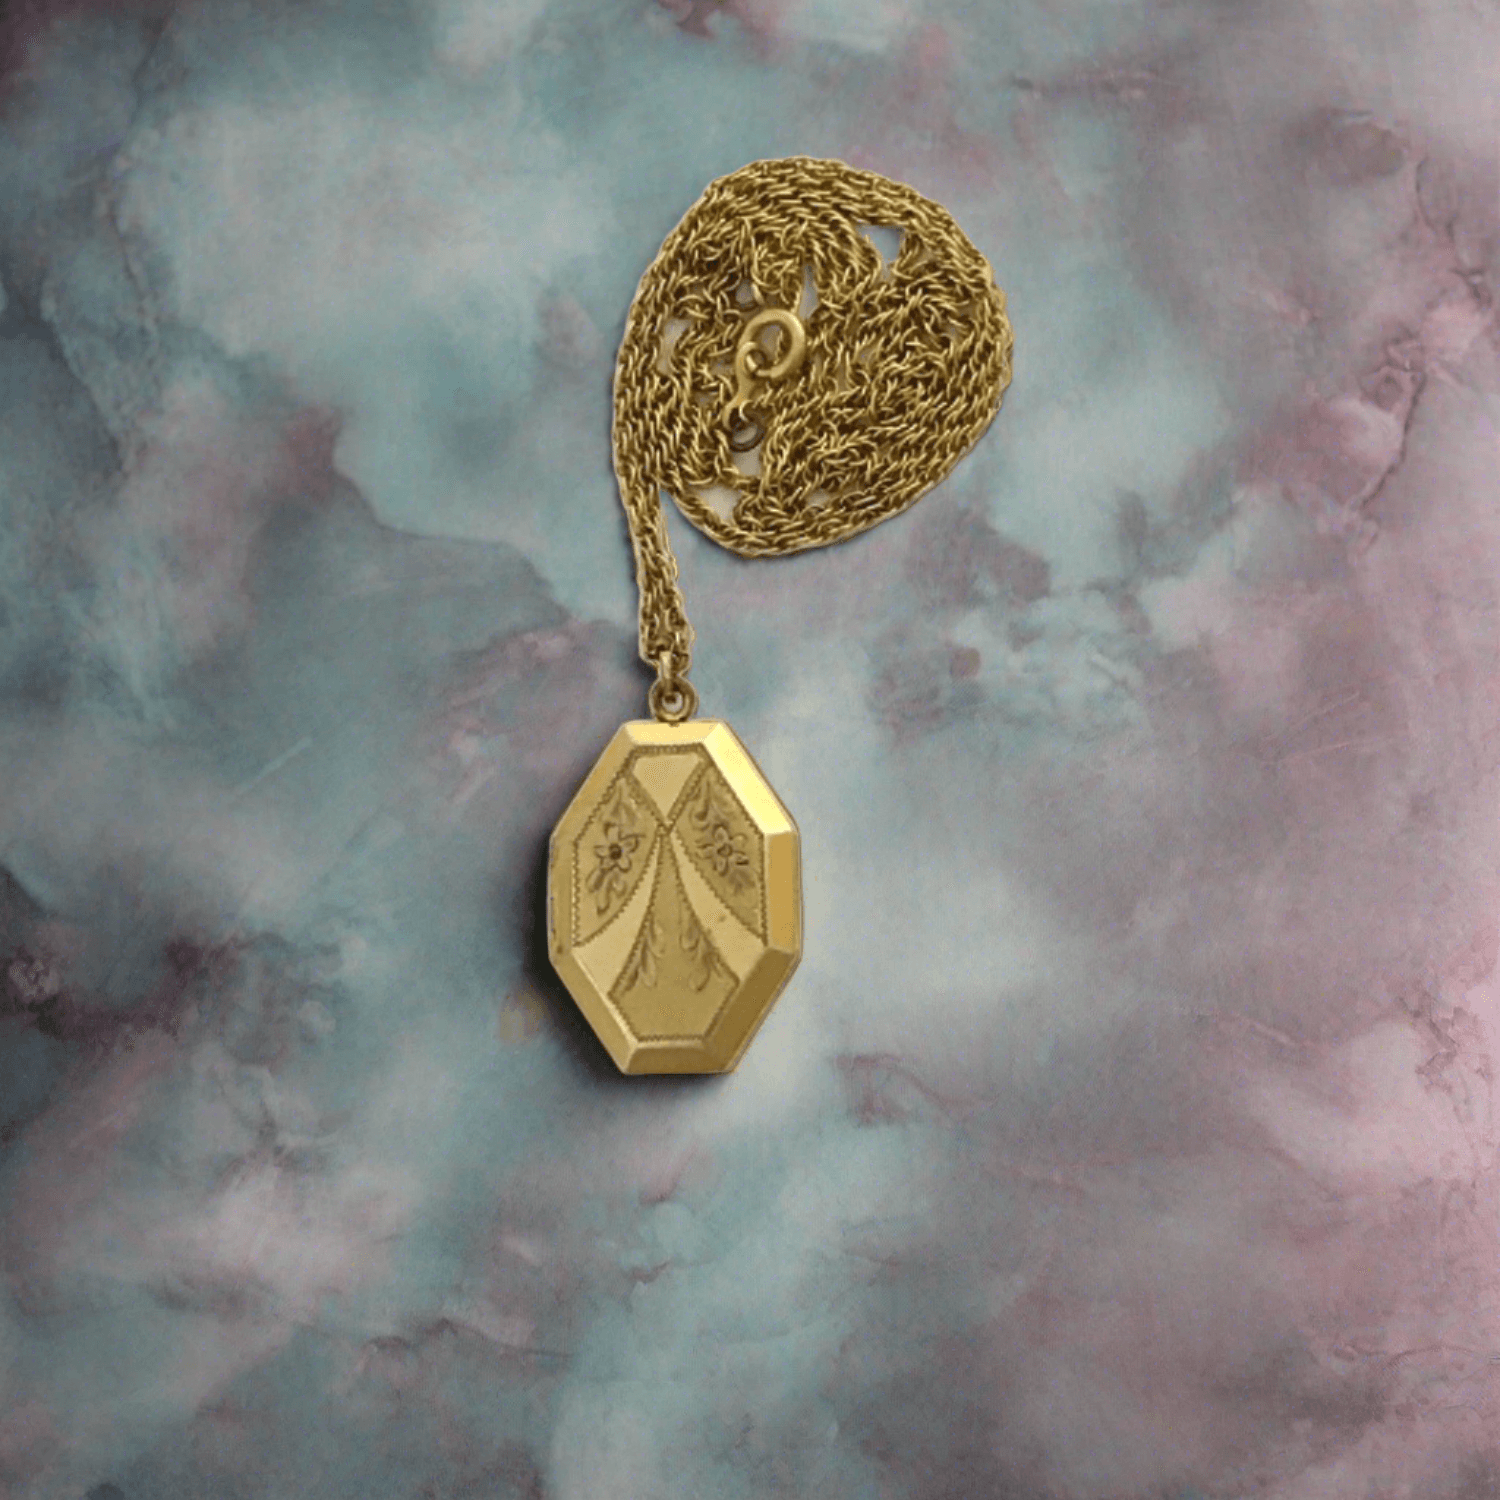 Vintage Geometric Gold Filled Art Deco Locket with Chain - Lamoree’s Vintage